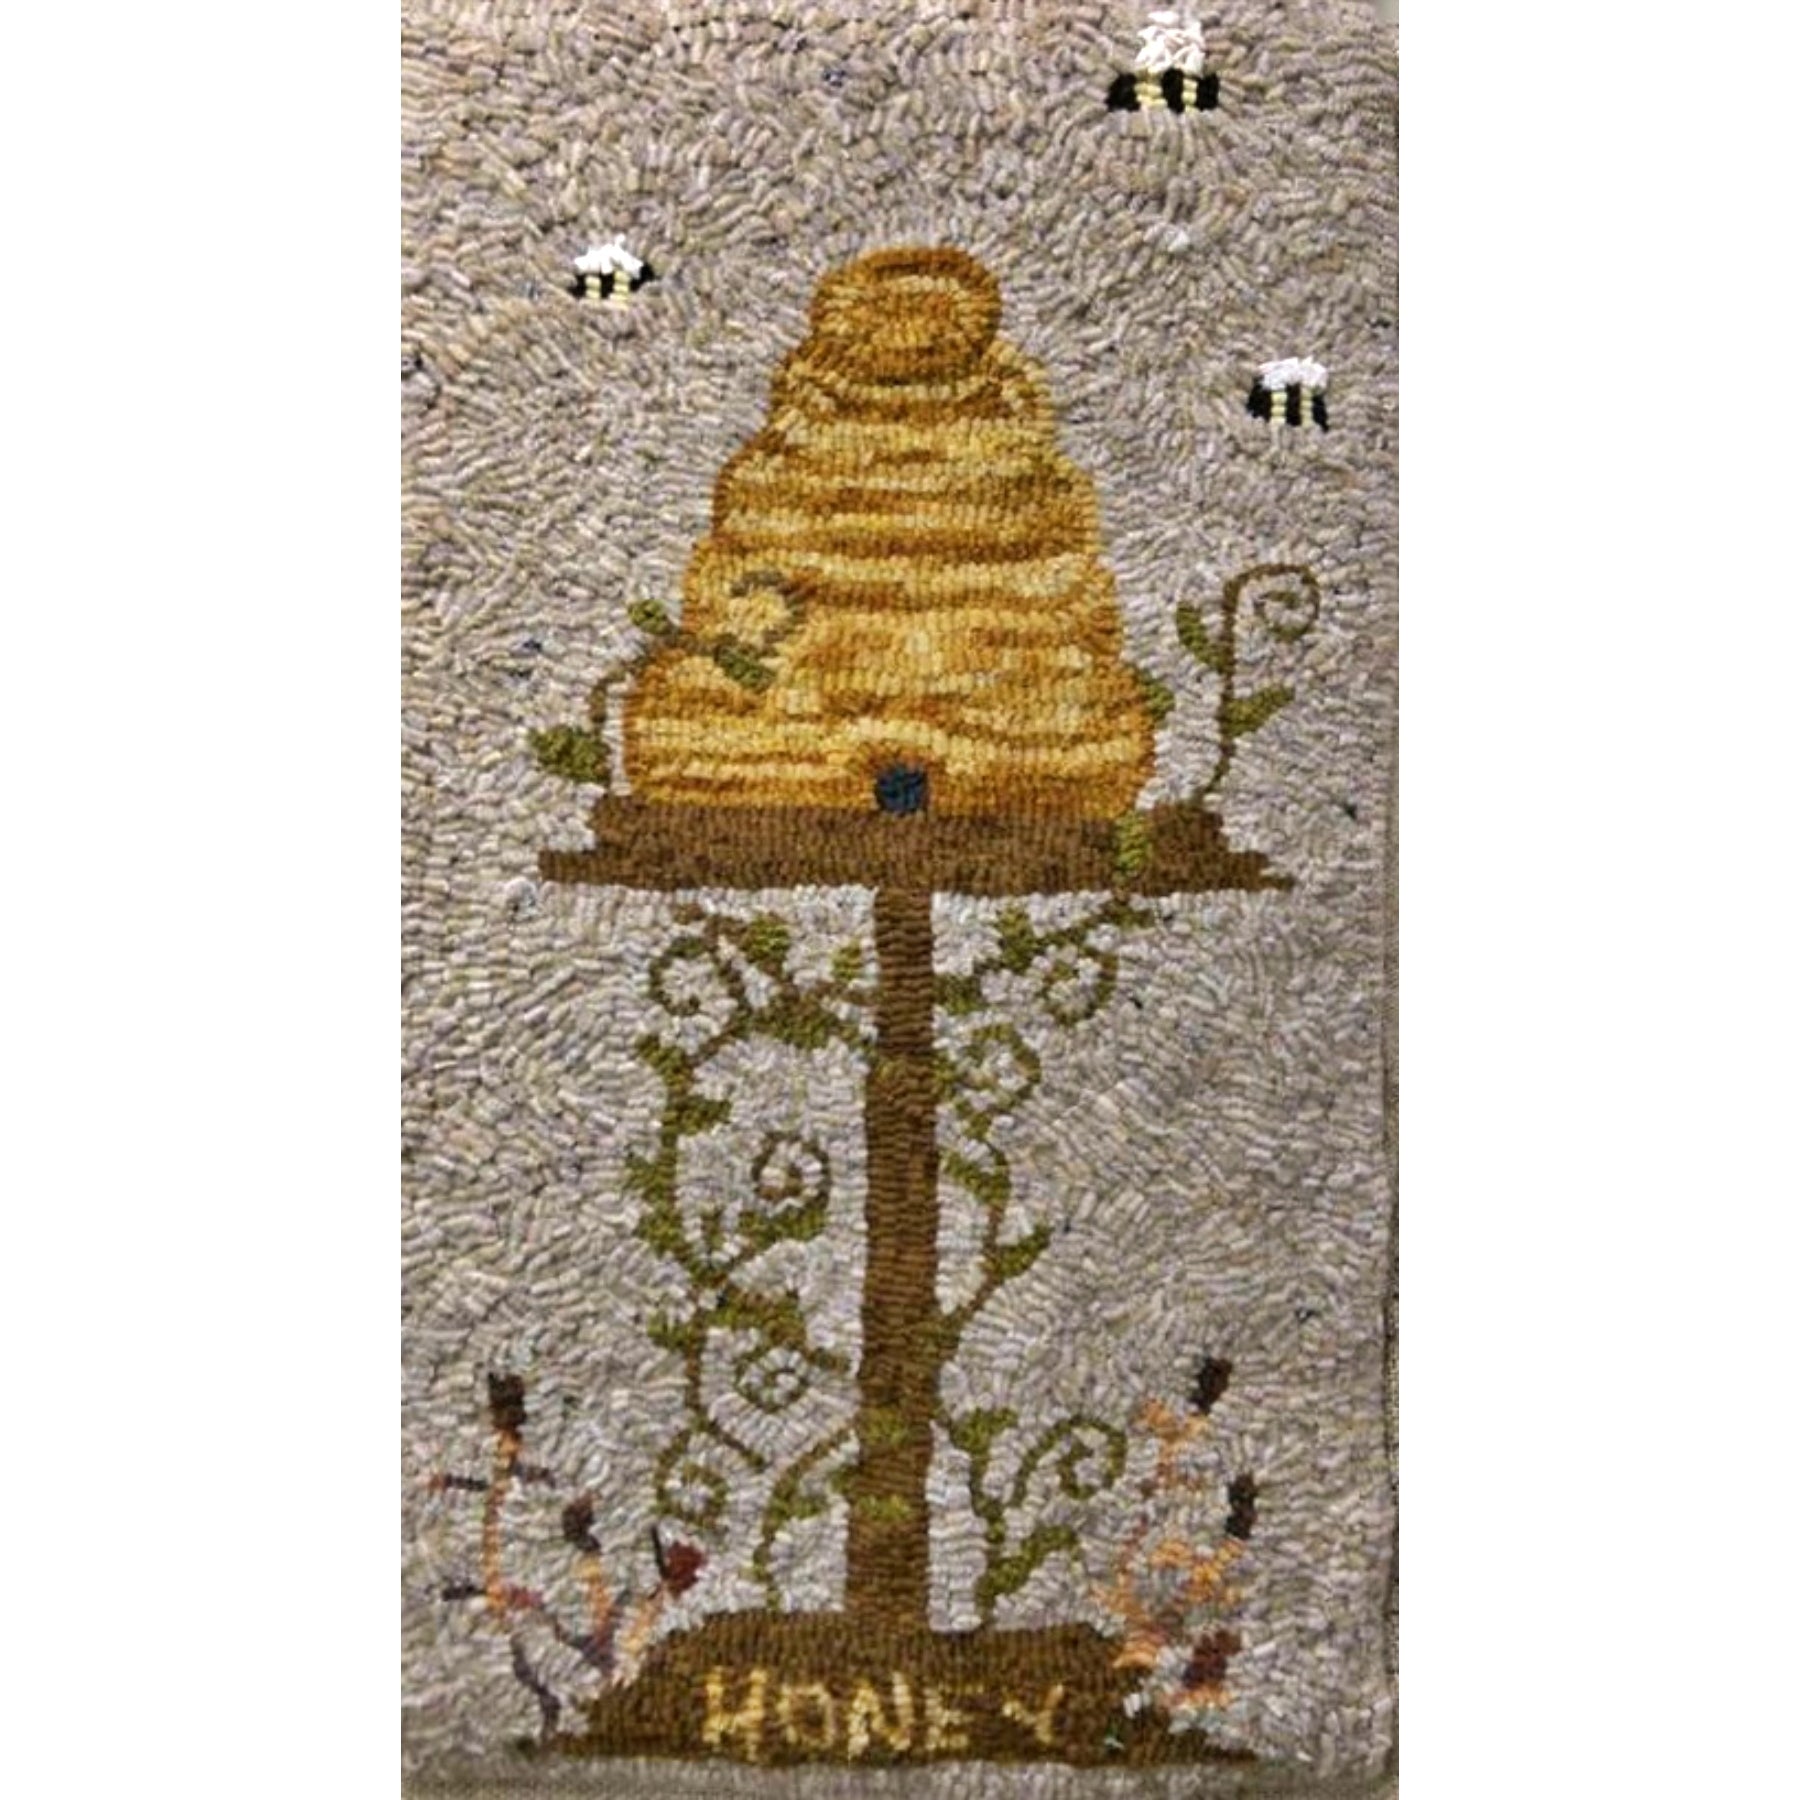 Honey, rug hooked by Linda Koch